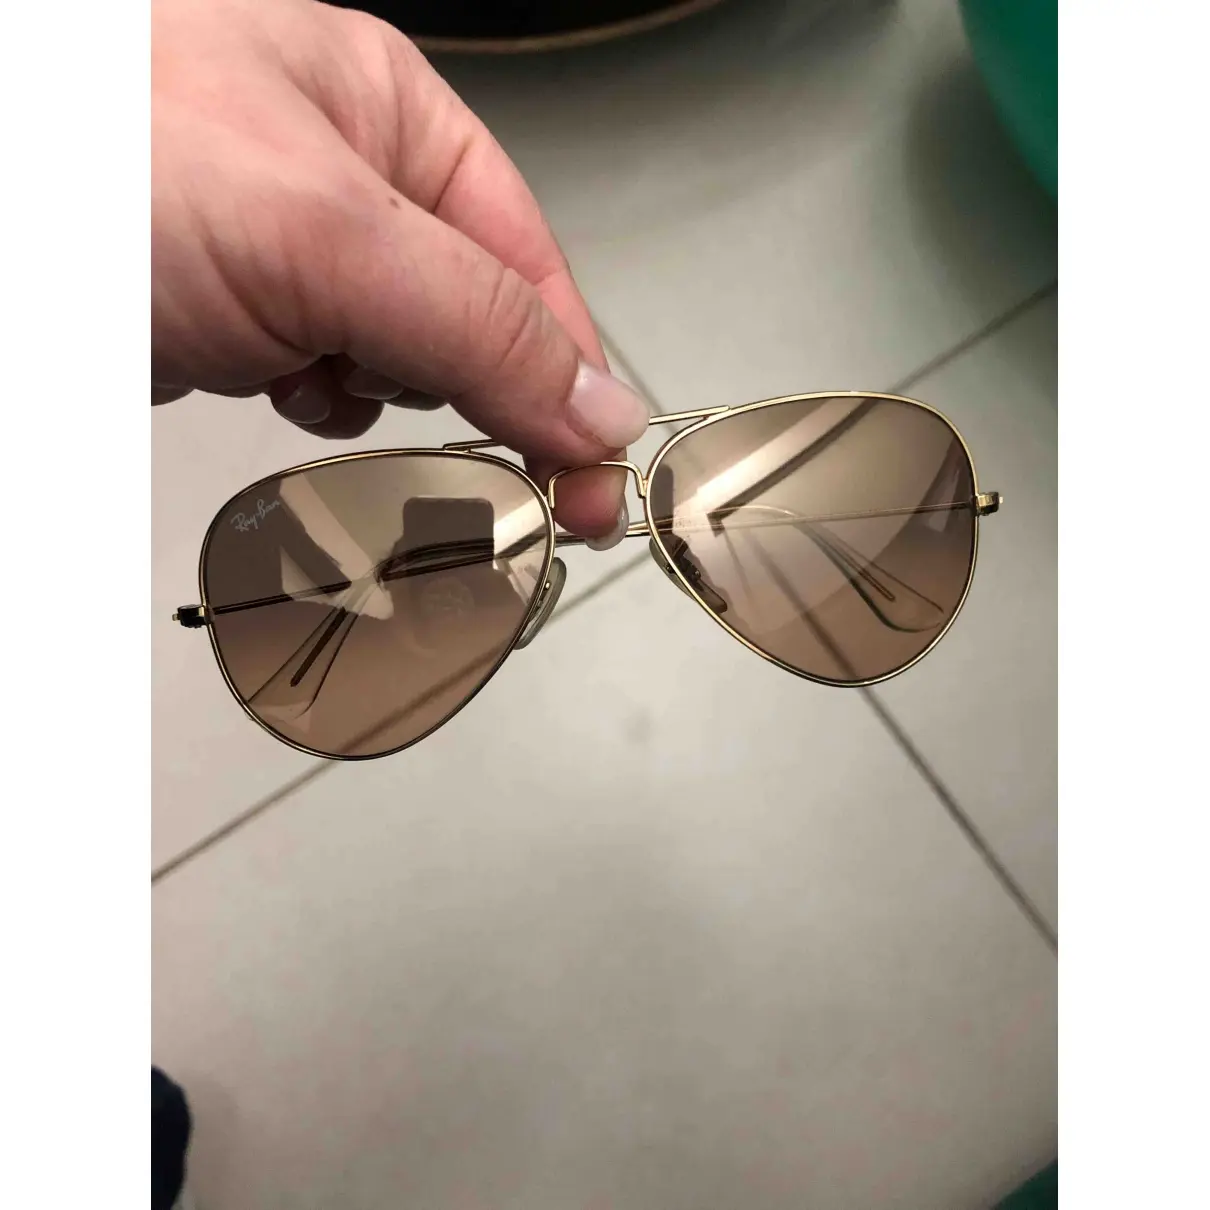 Buy Ray-Ban Aviator sunglasses online - Vintage